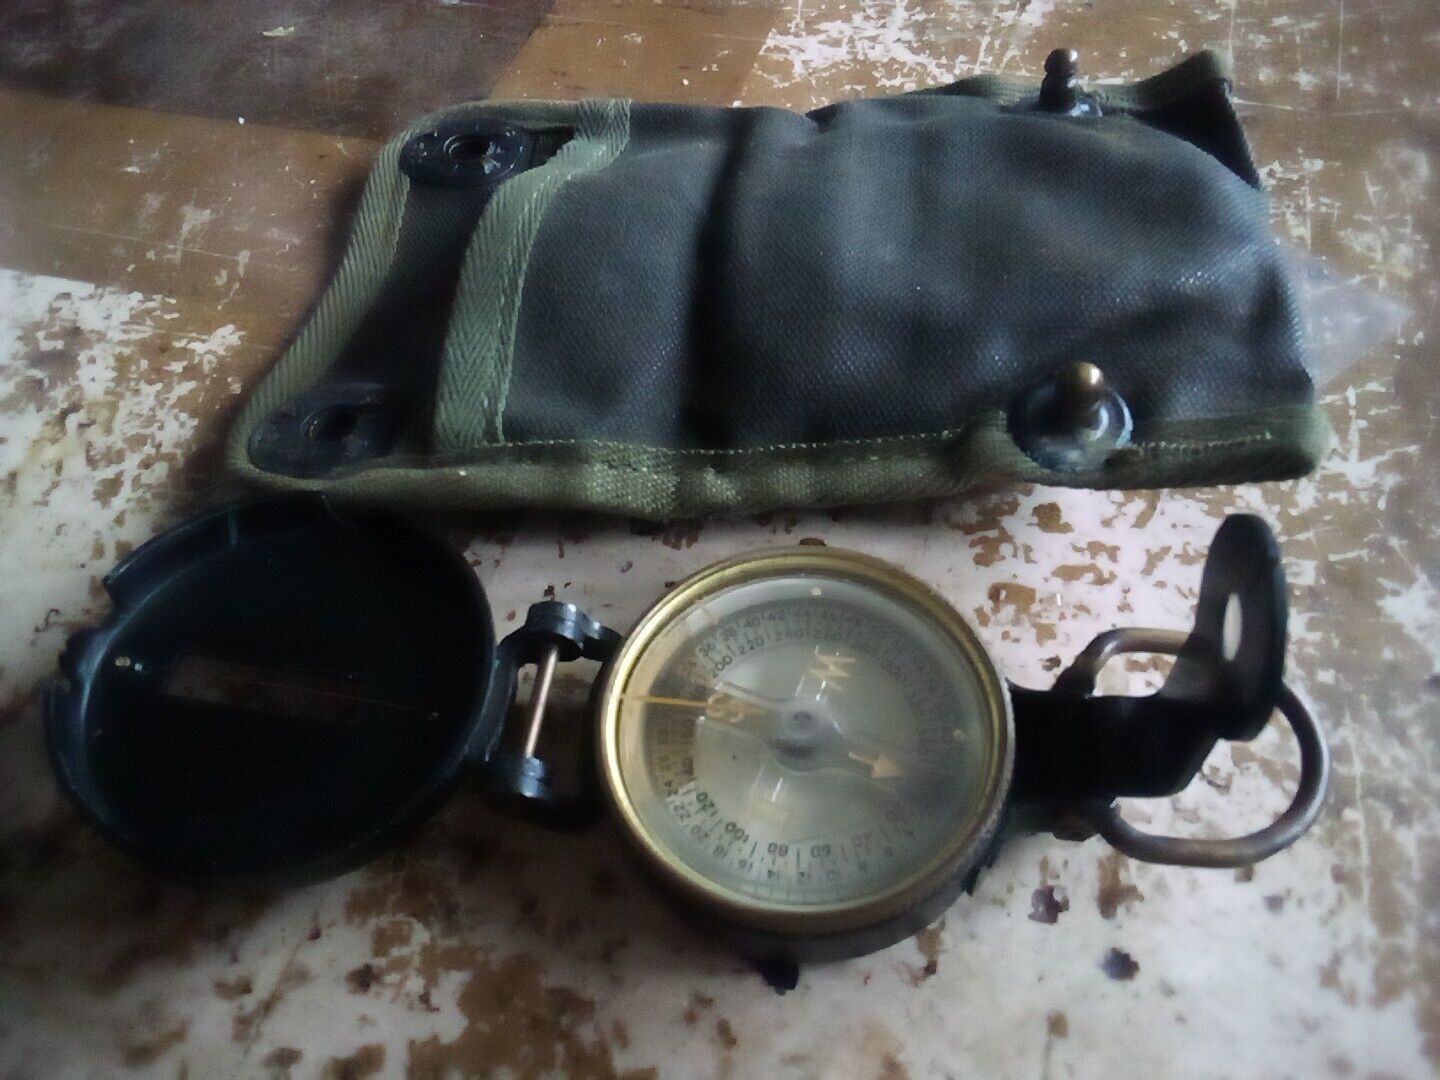 Vintage WW2, Rare Original U.S. Army Corps of Engineer Compass With Case